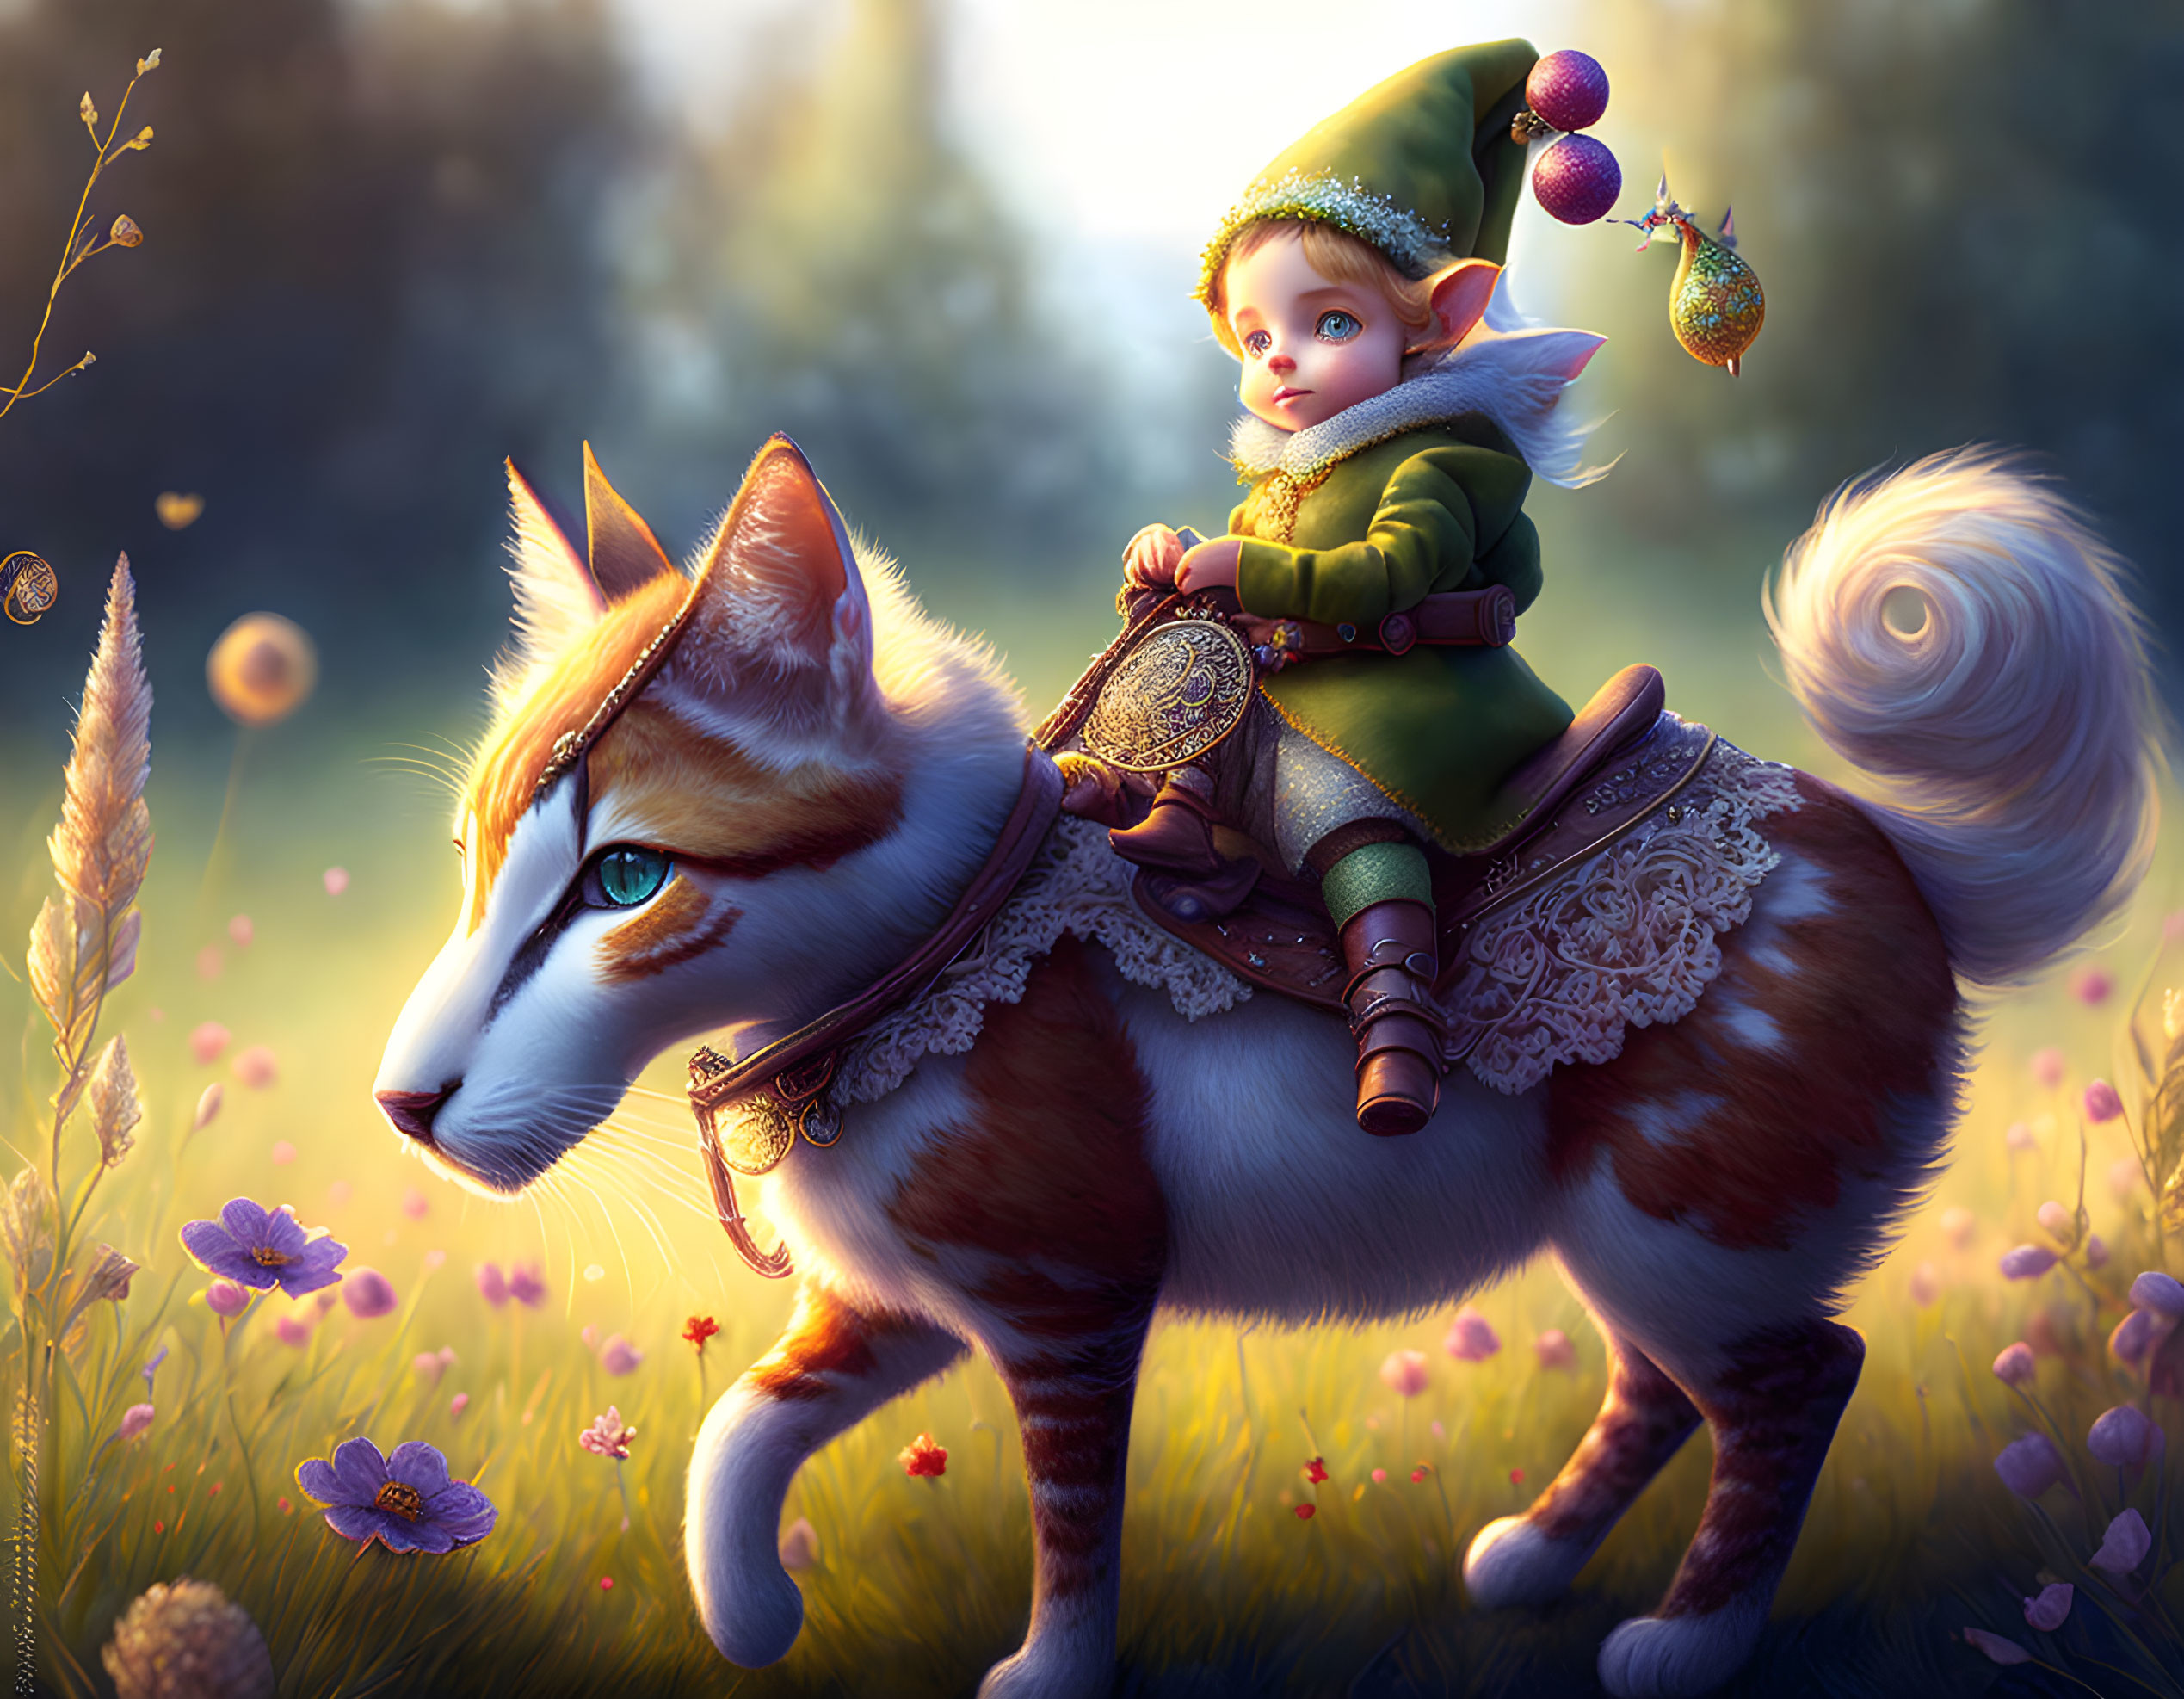 A cute little elf, riding on a cat.